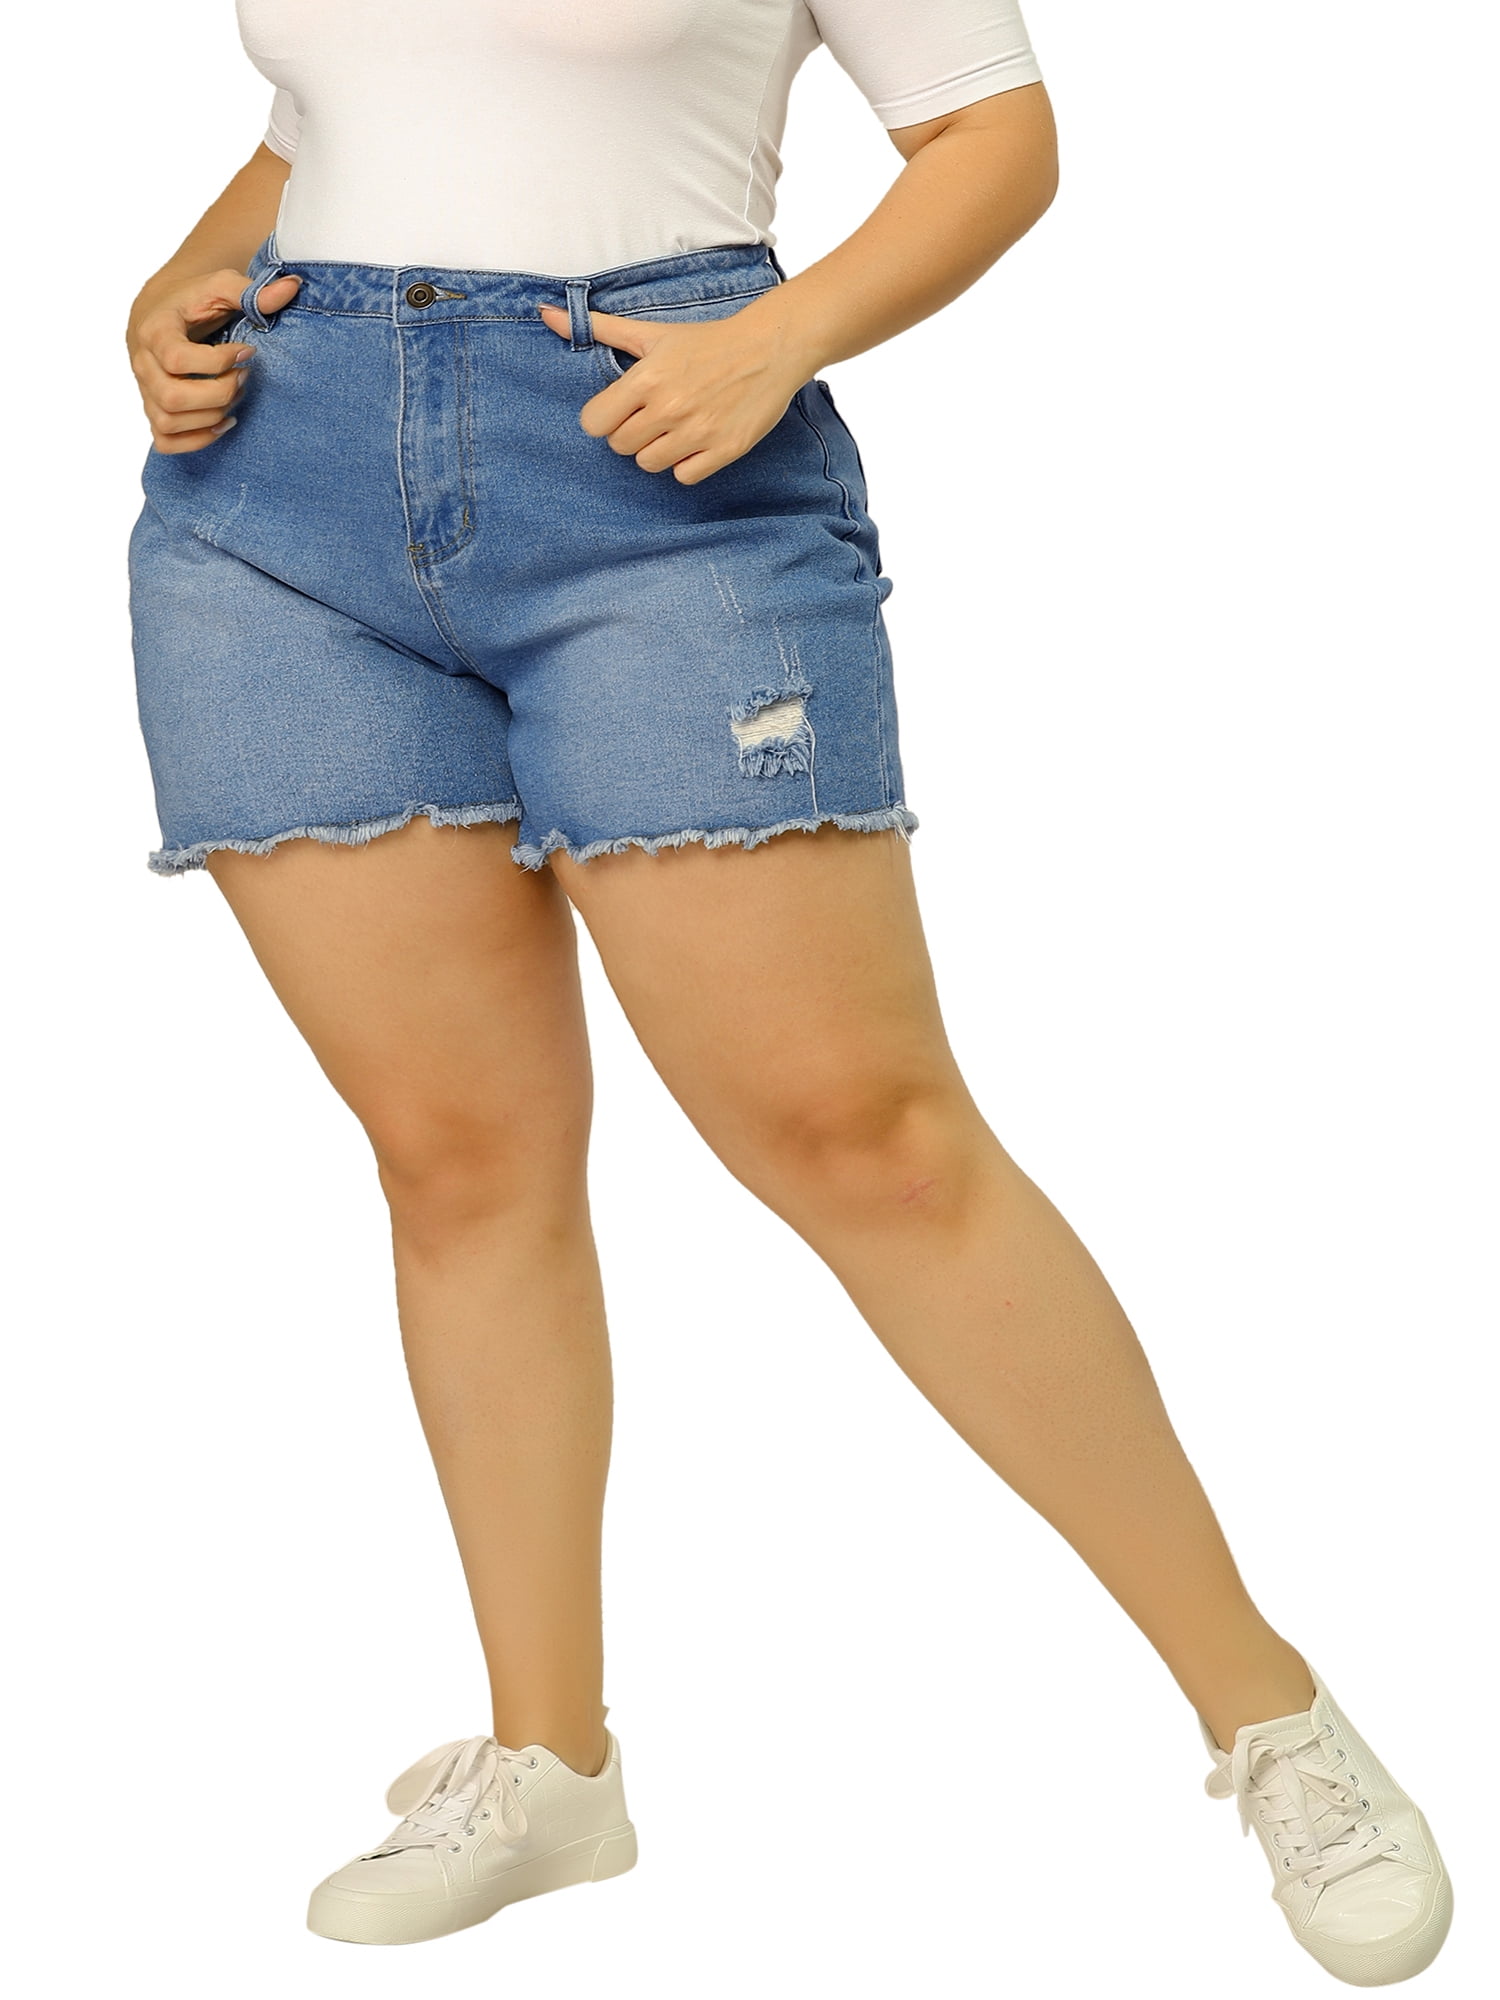 Unique Bargains Womens Plus Size Summer Denim Shorts Raw Hem Casual Jean Shorts